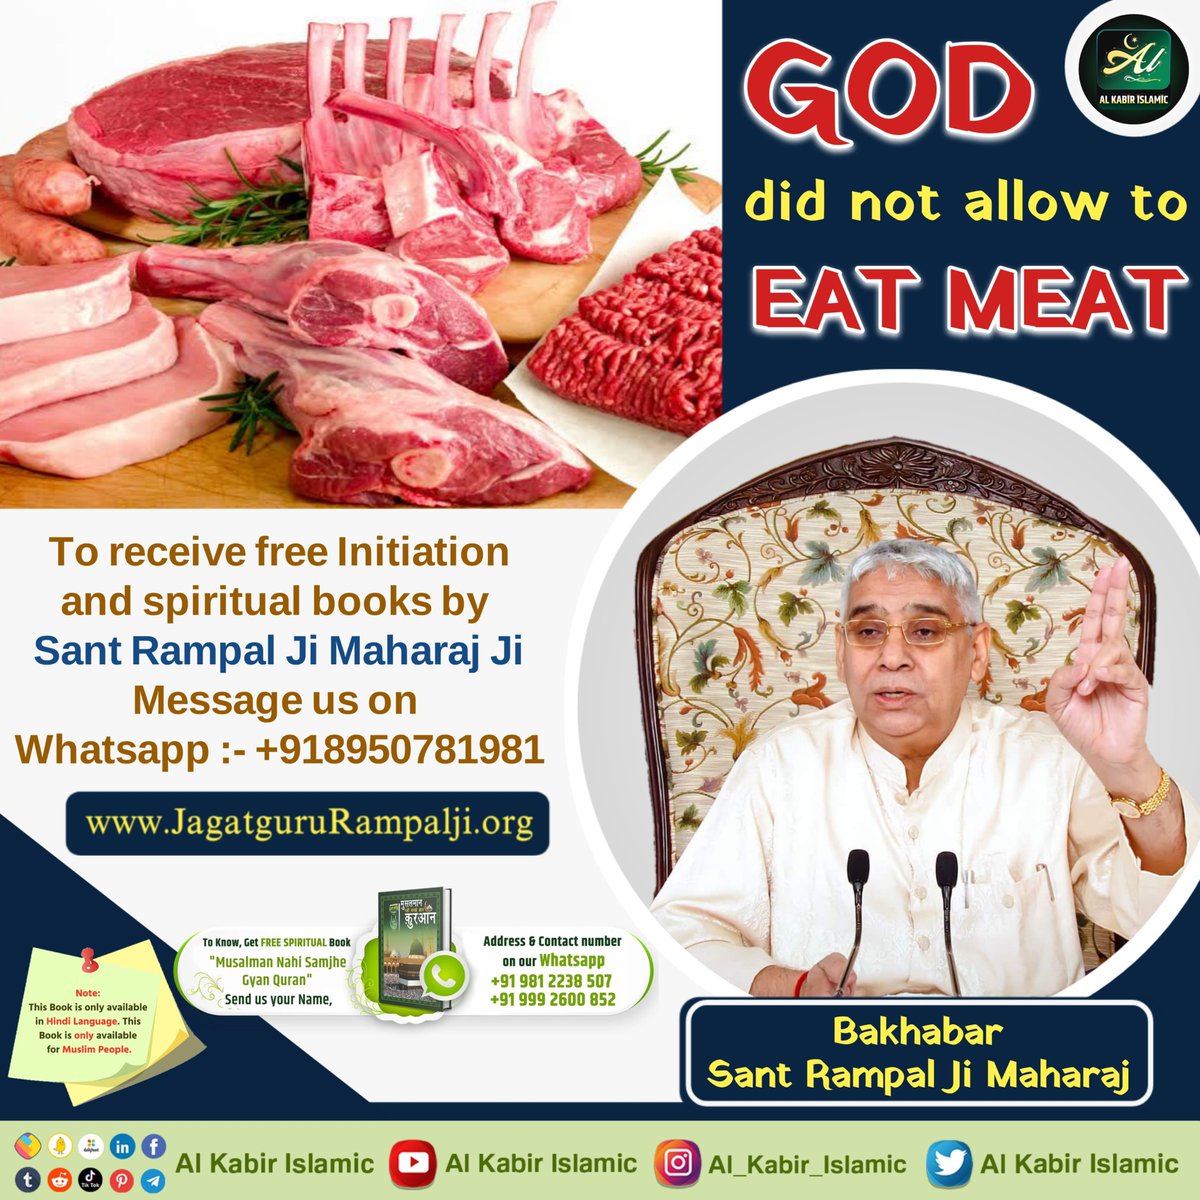 God did not allow to eat meat!
#AlKabir_Islamic
#SaintRampalJi